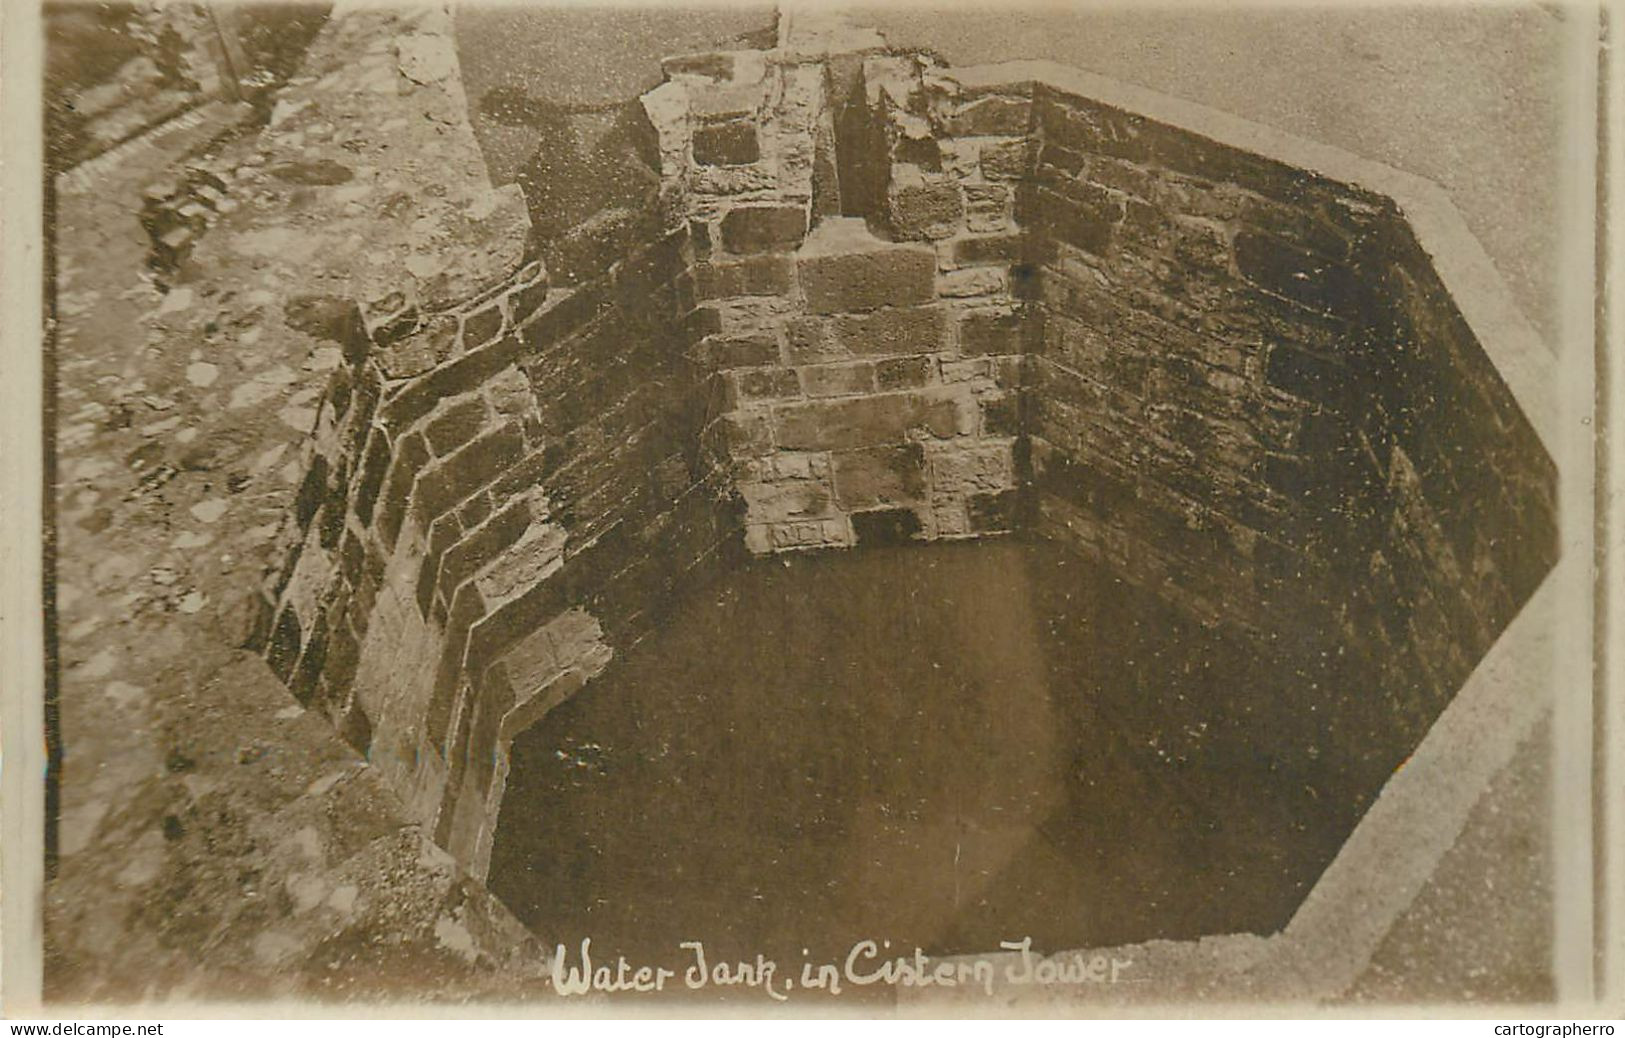 Cistern Tower To Identify - To Identify